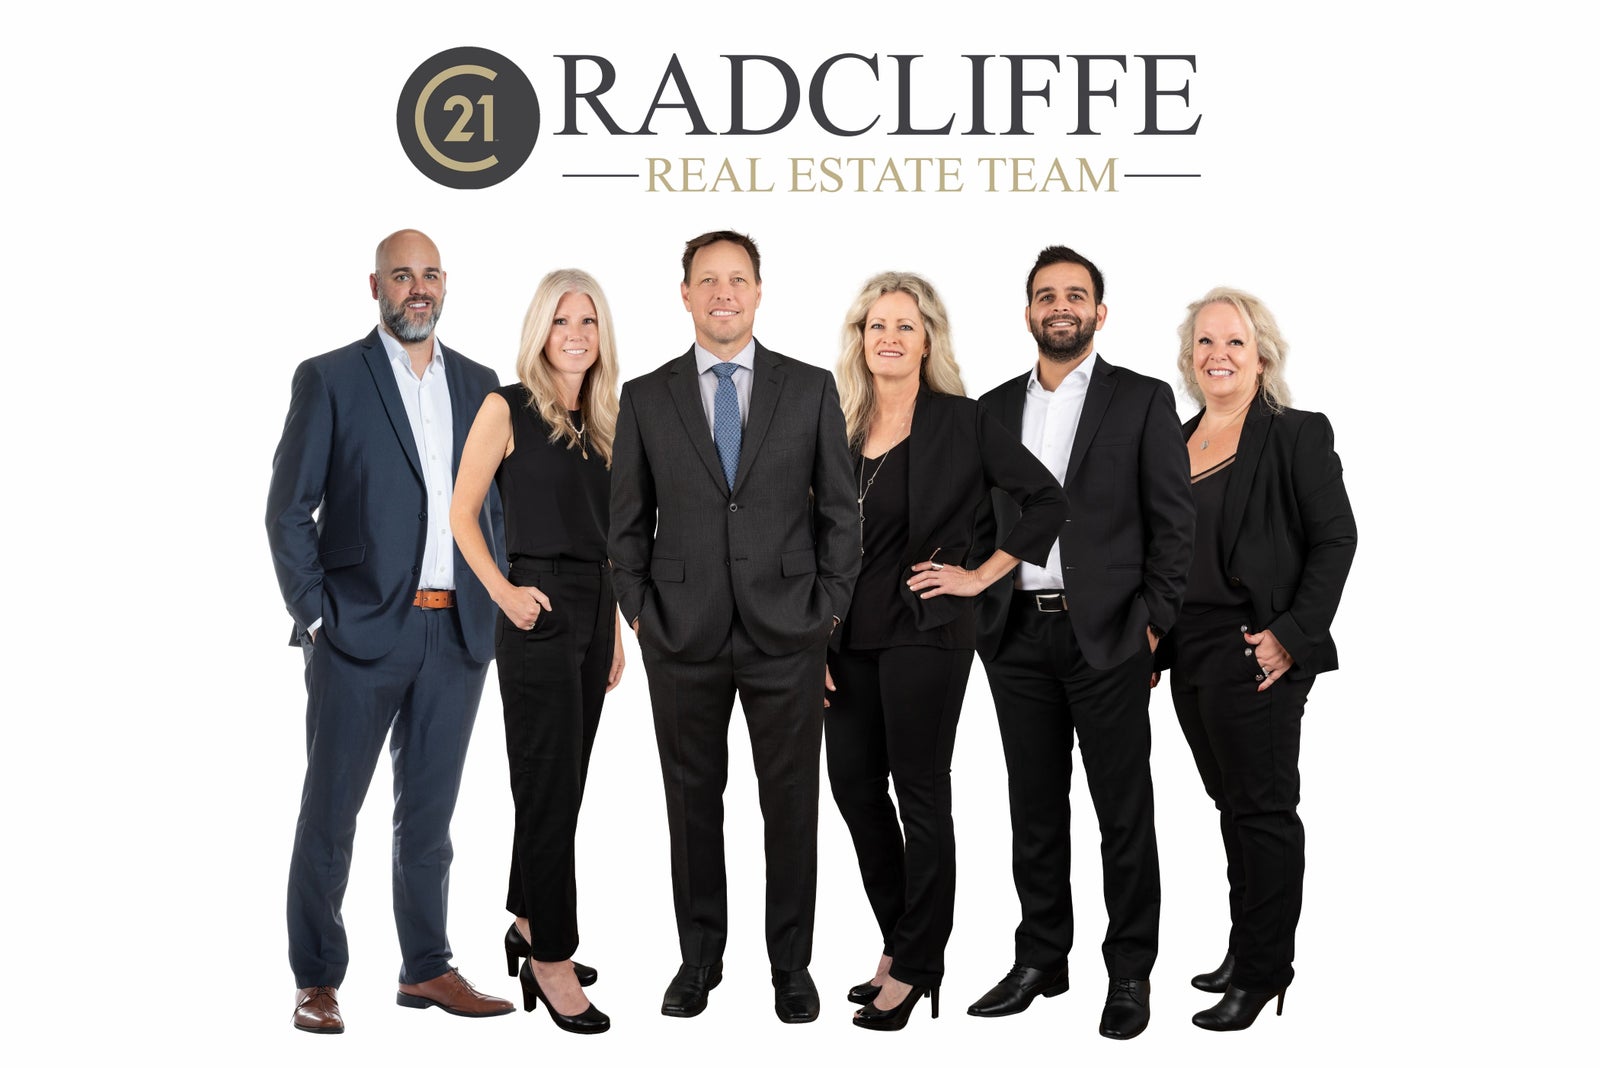 The Radcliffe Real Estate Team, Mike Radcliffe, Julie Radcliffe